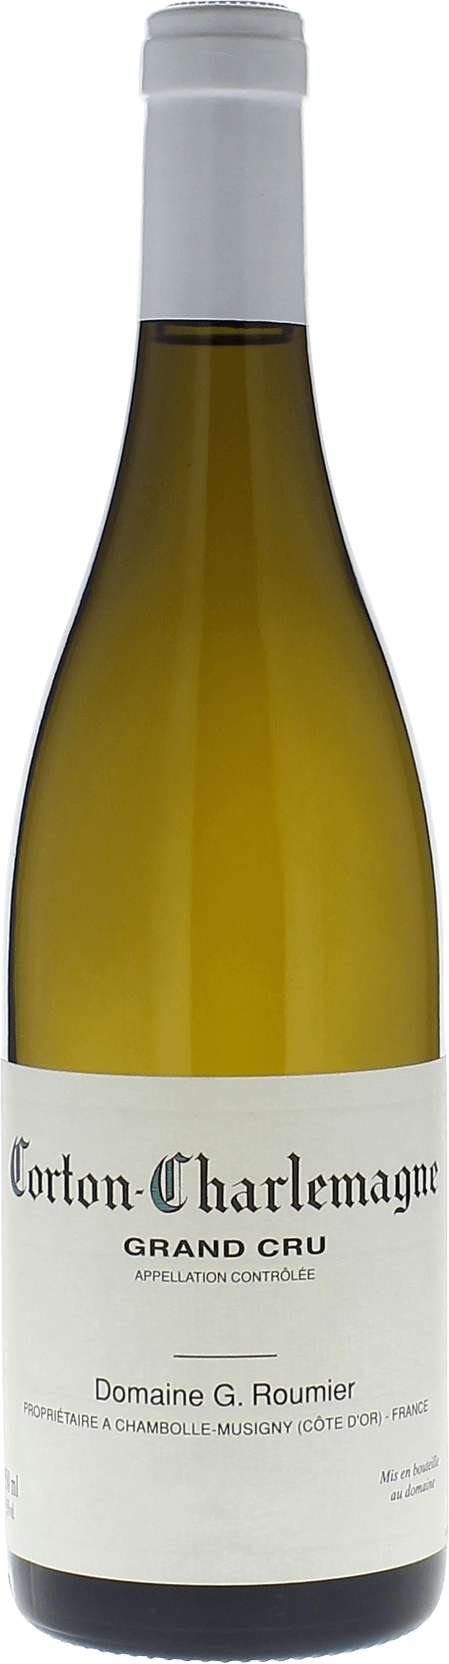 Corton charlemagne grand cru 2014 Domaine ROUMIER, Bourgogne blanc